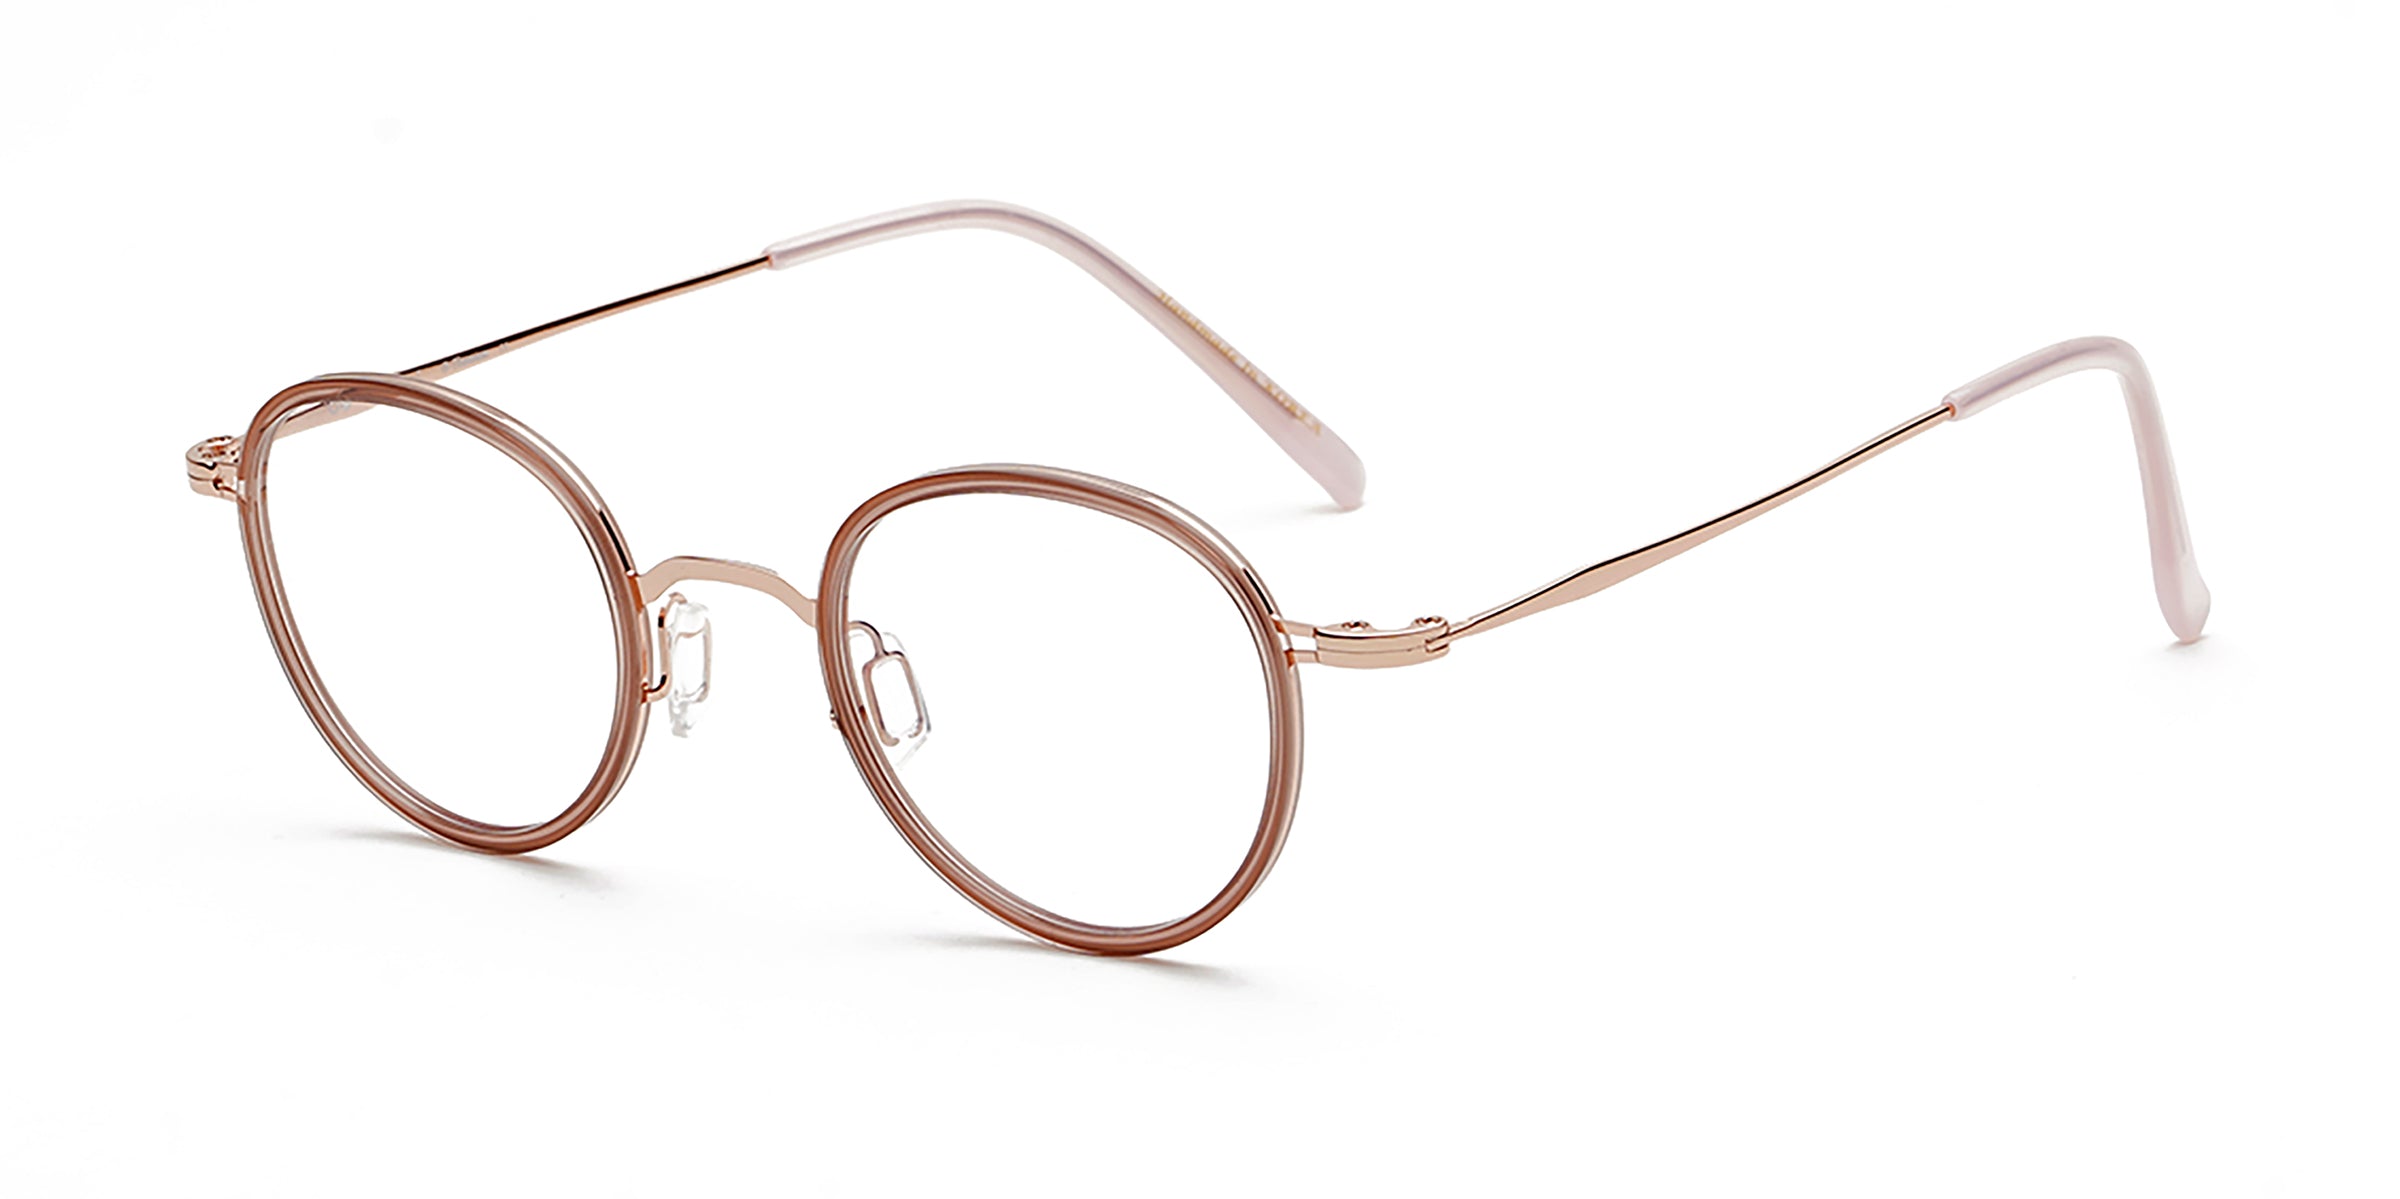 odd pink oval eyeglasses frames angled view